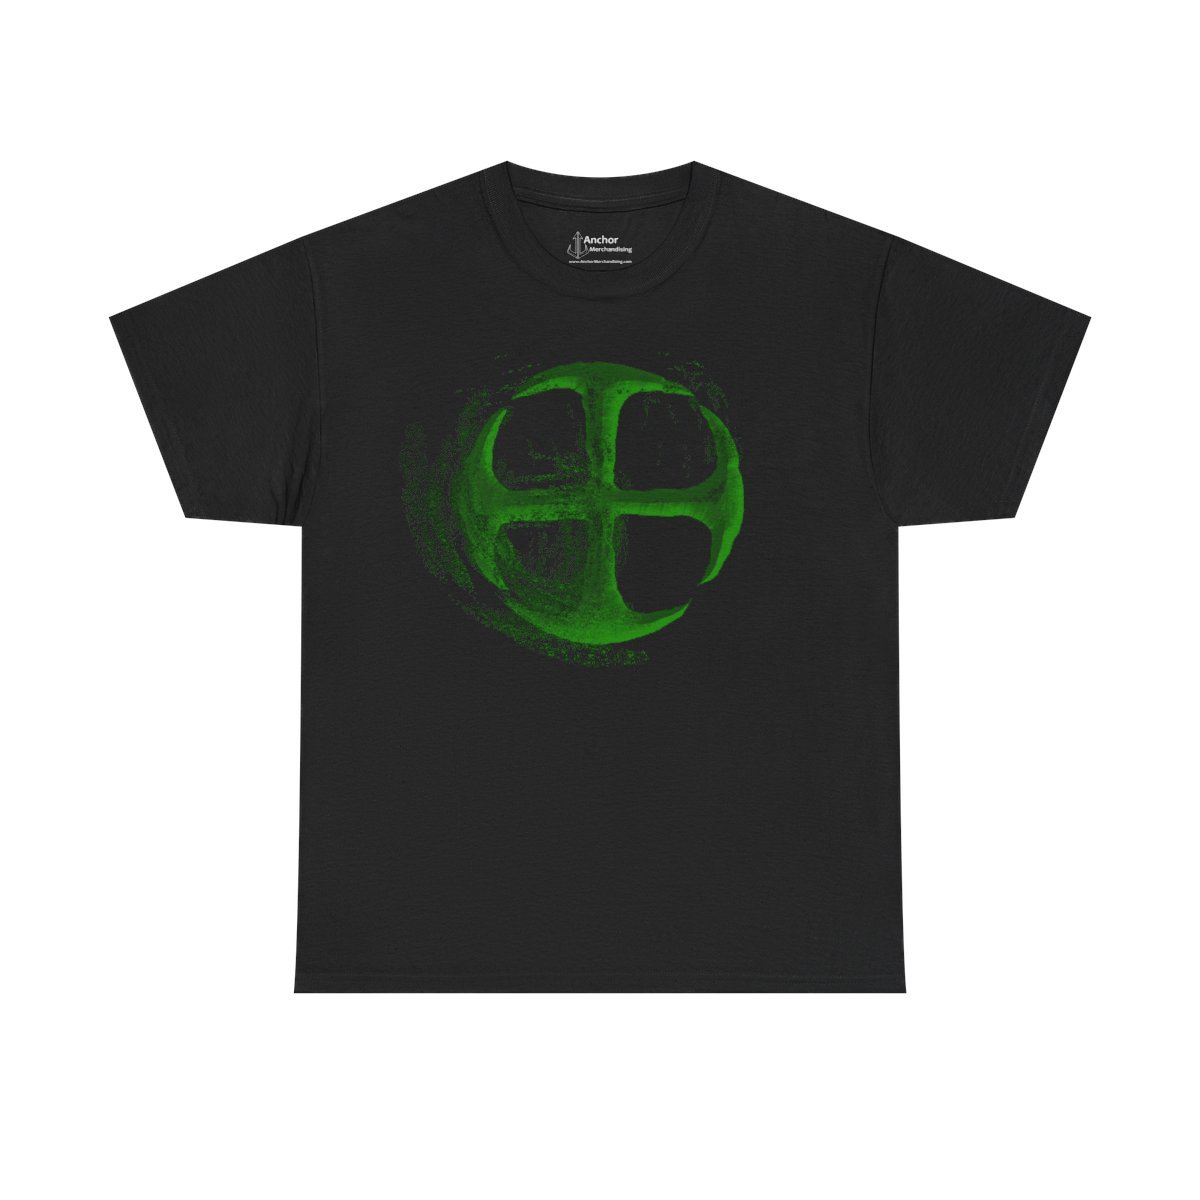 Deliverance Disintegrating Cross Green Short Sleeve Tshirt (2-Sided)